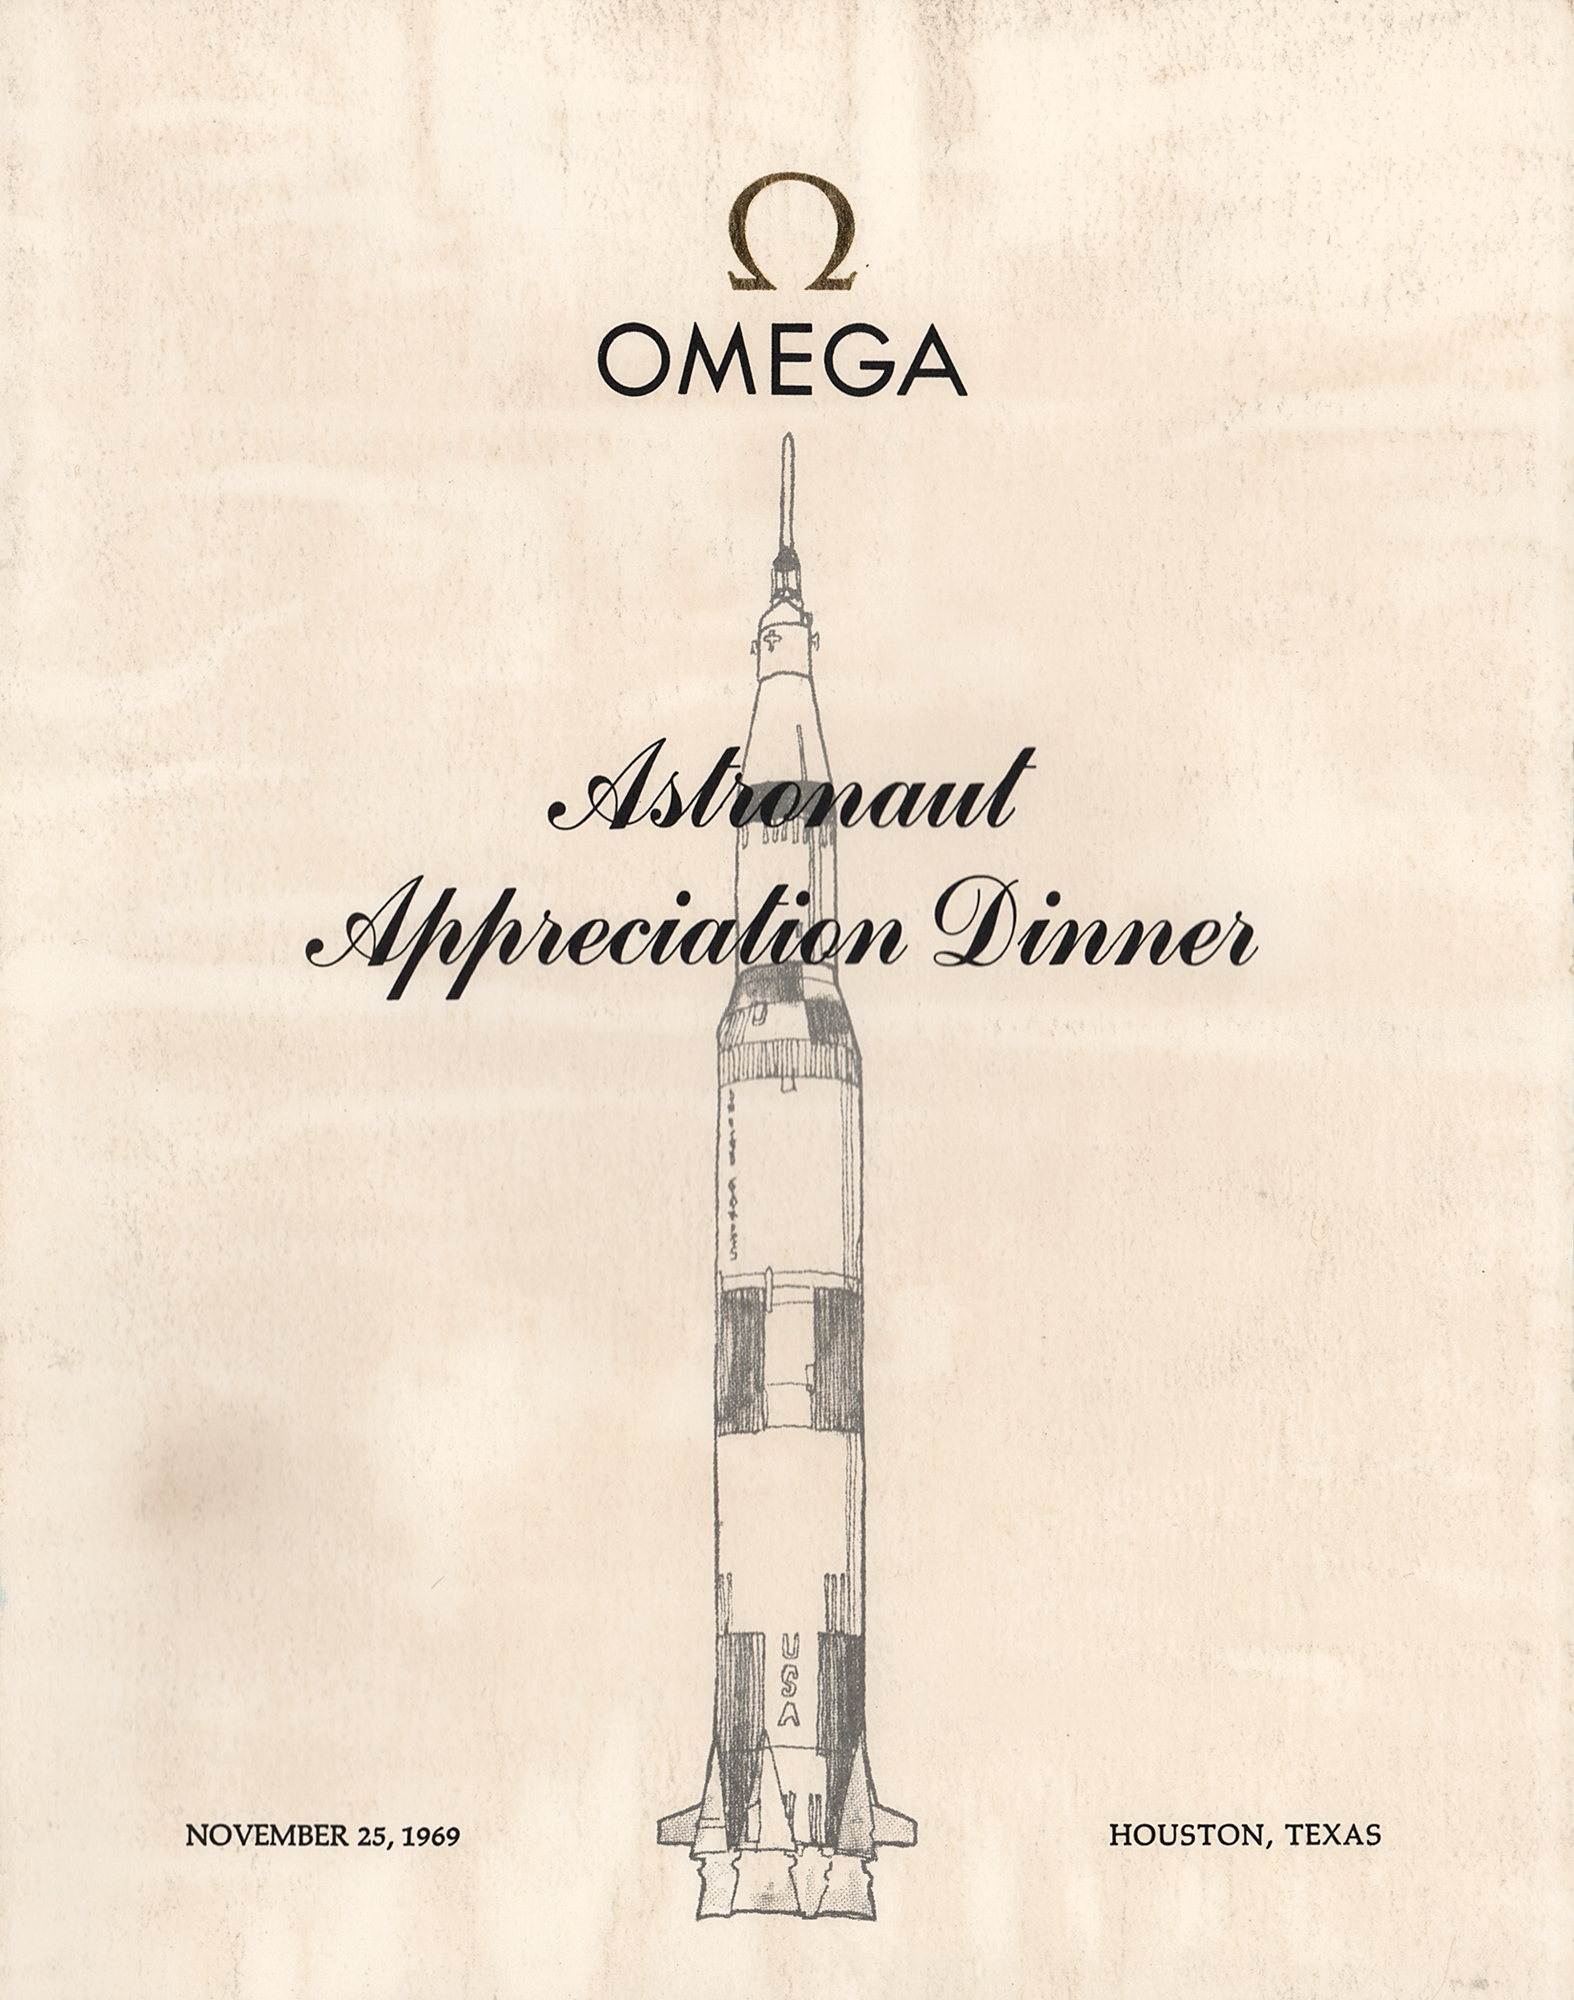 Lot #9011 Neil Armstrong's Omega Apollo Astronaut Appreciation Dinner Menu